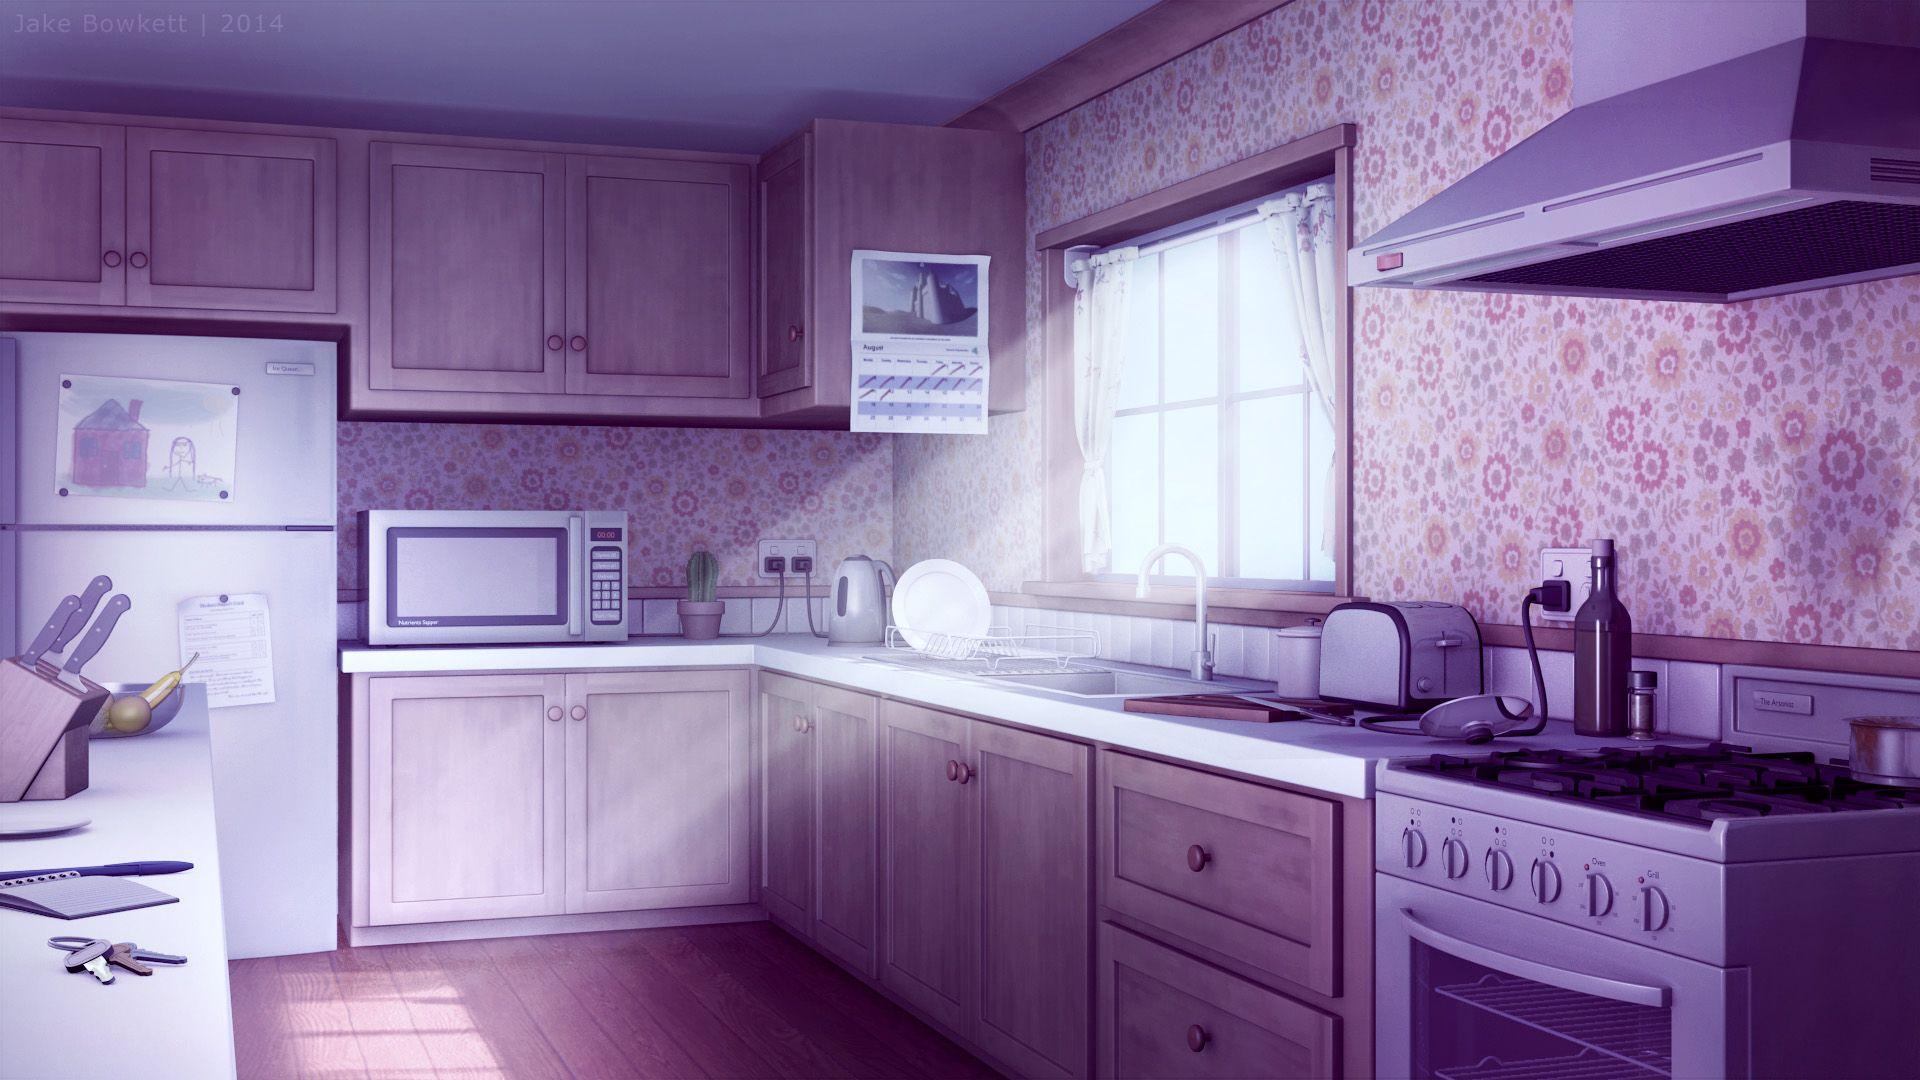 AI Art Generator: Anime aesthetic empty house kitchen